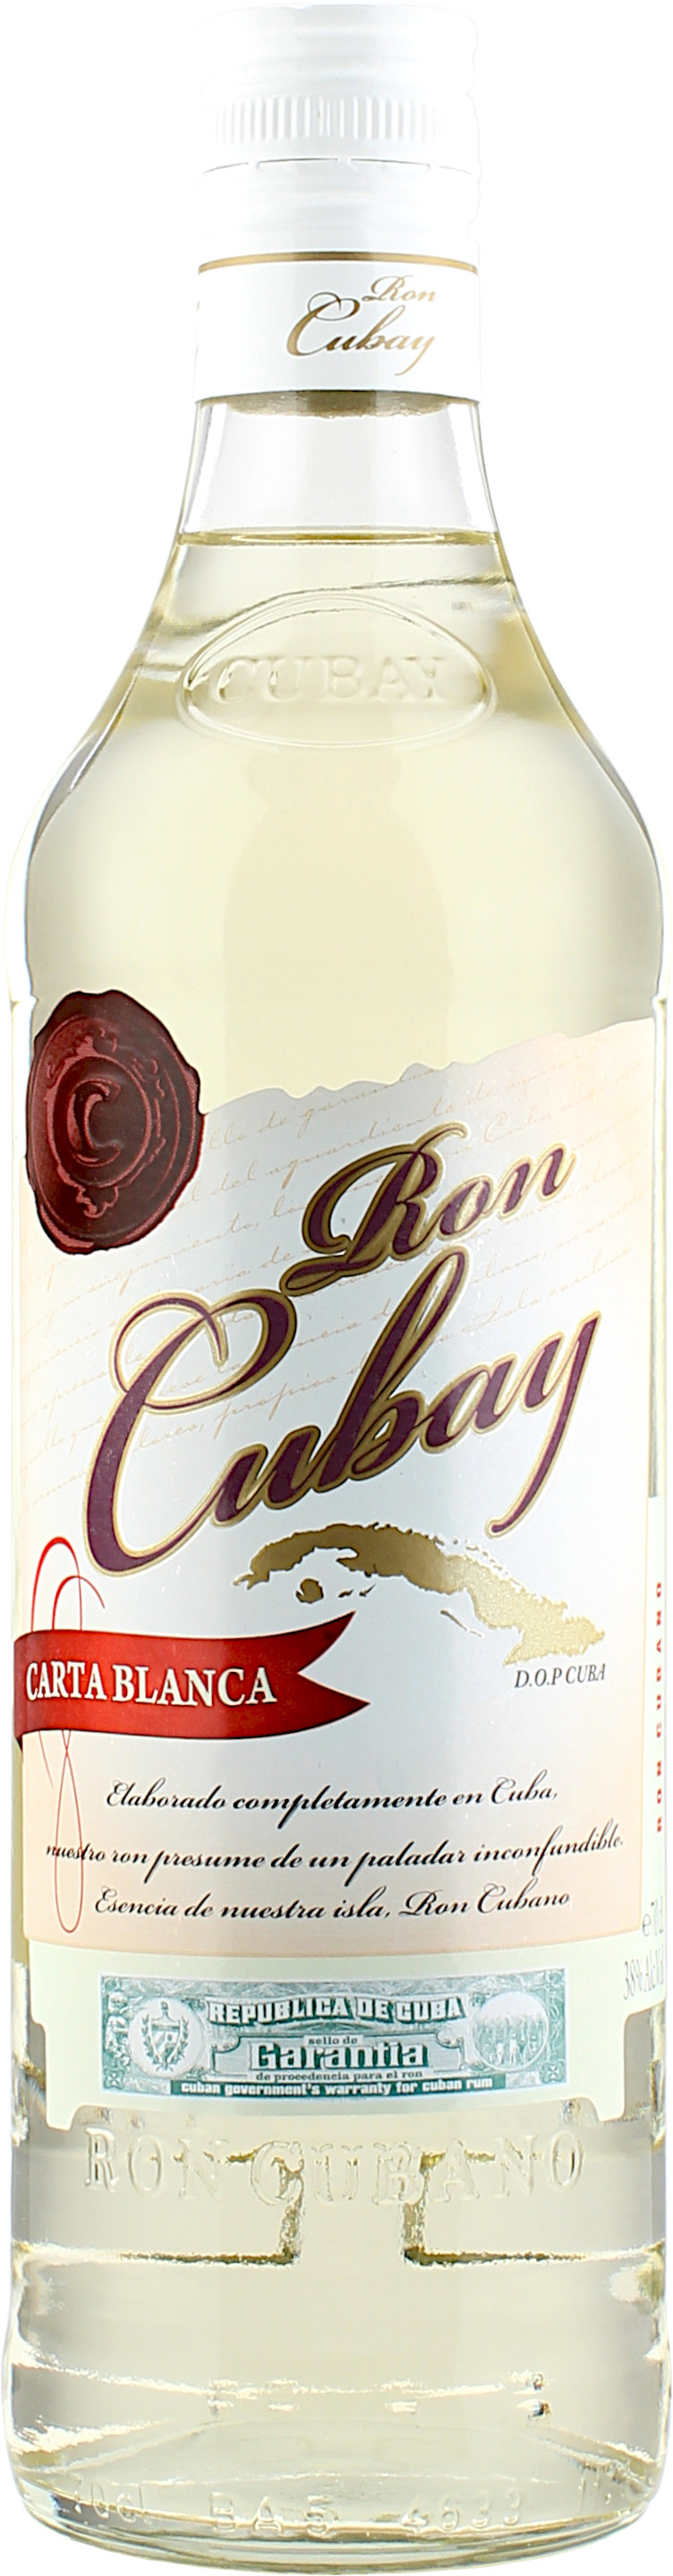 Ron Cubay Carta Blanca 38.0% 0,7l